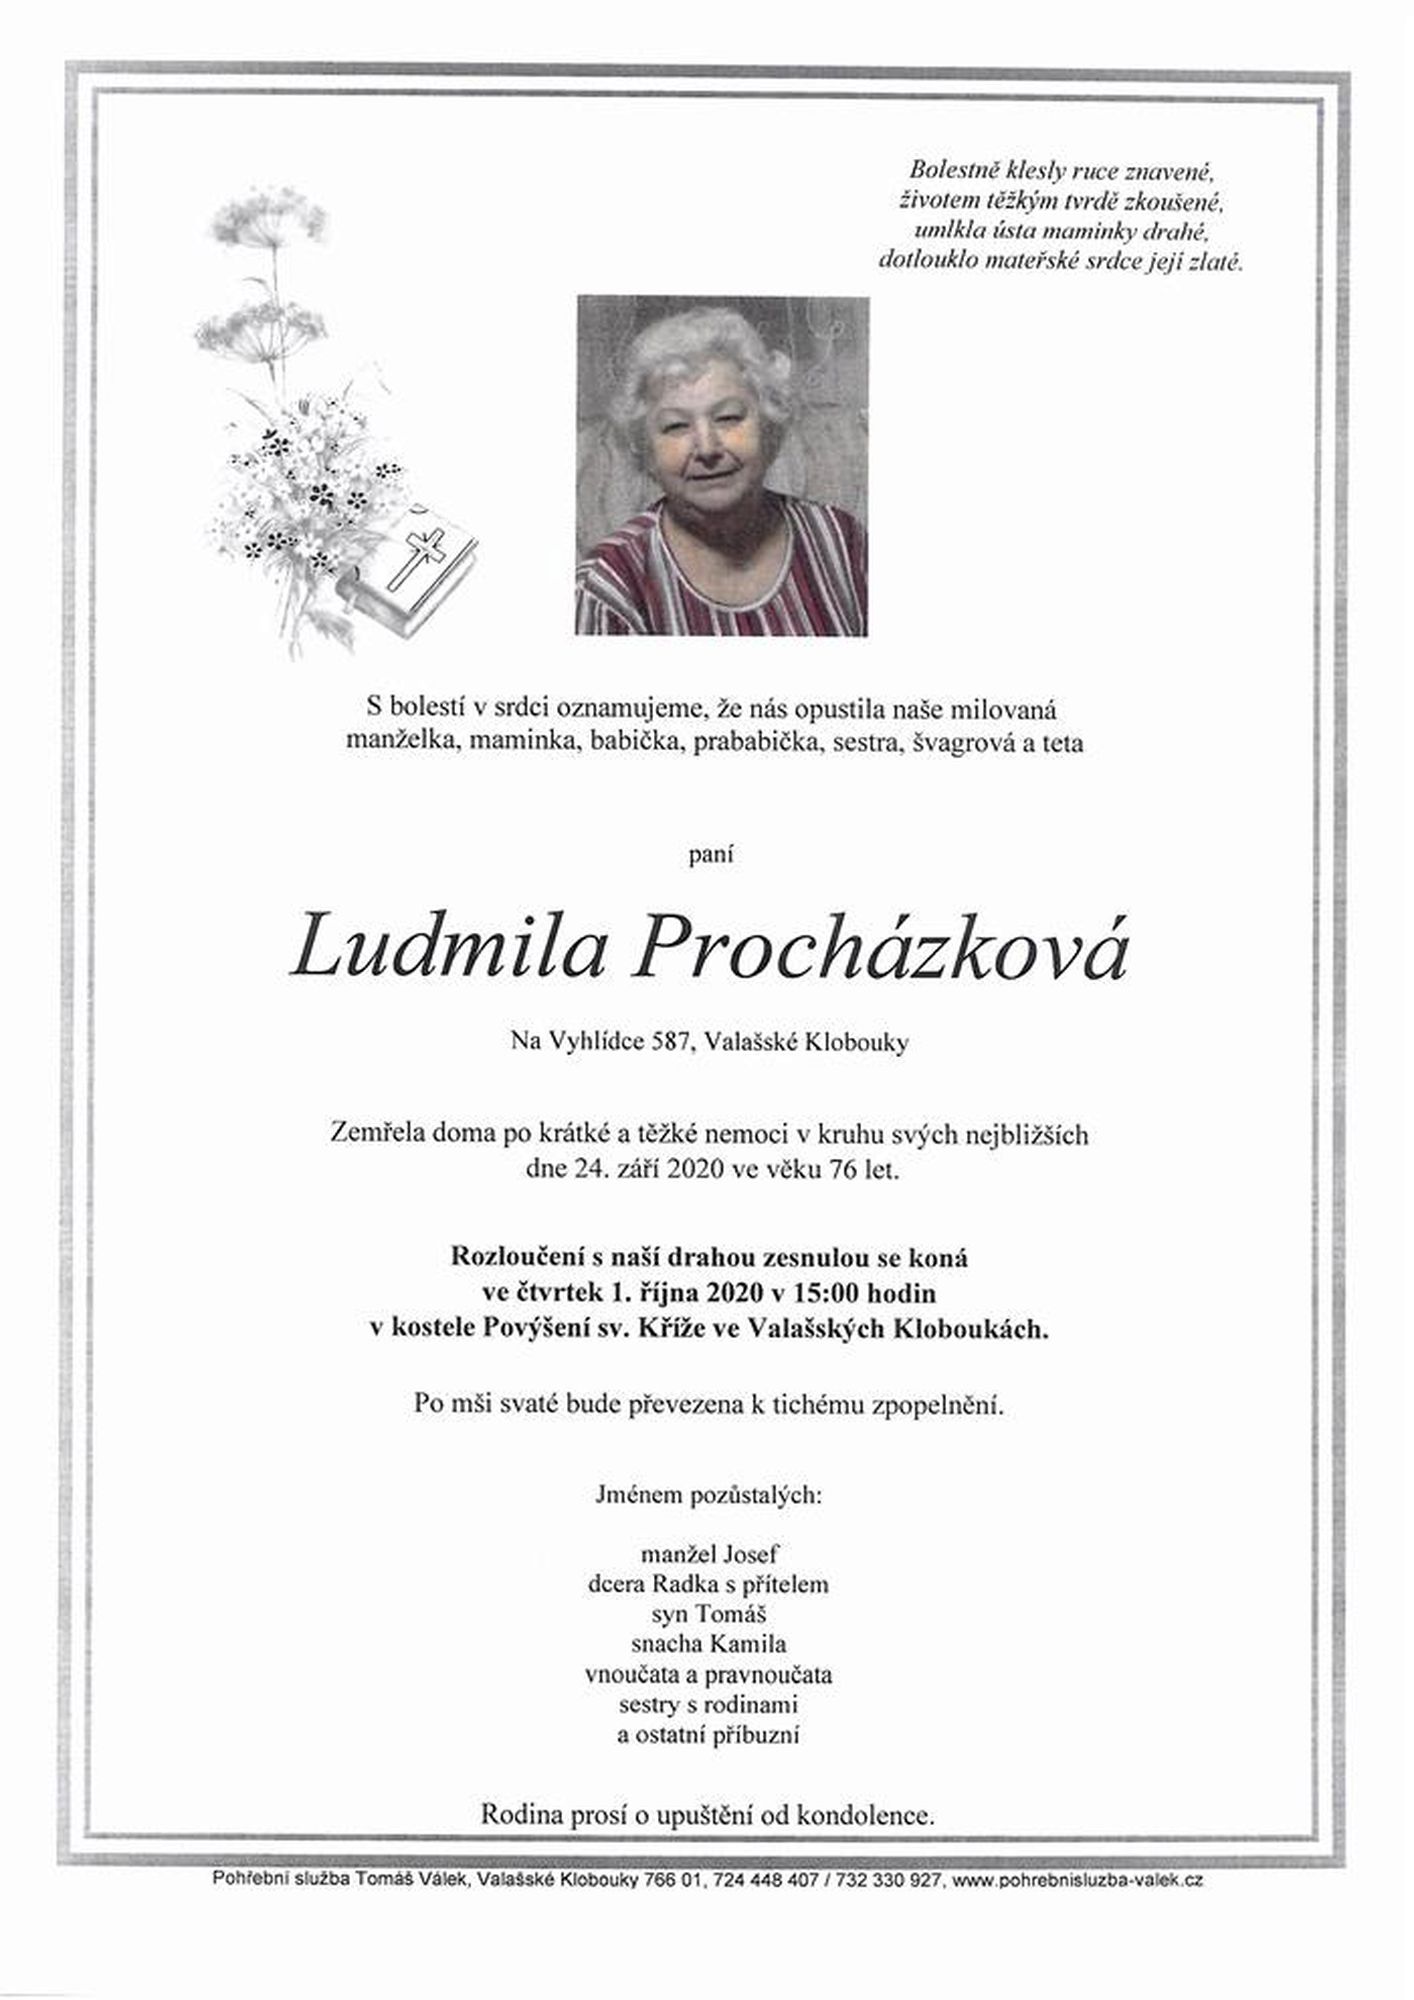 Ludmila Procházková